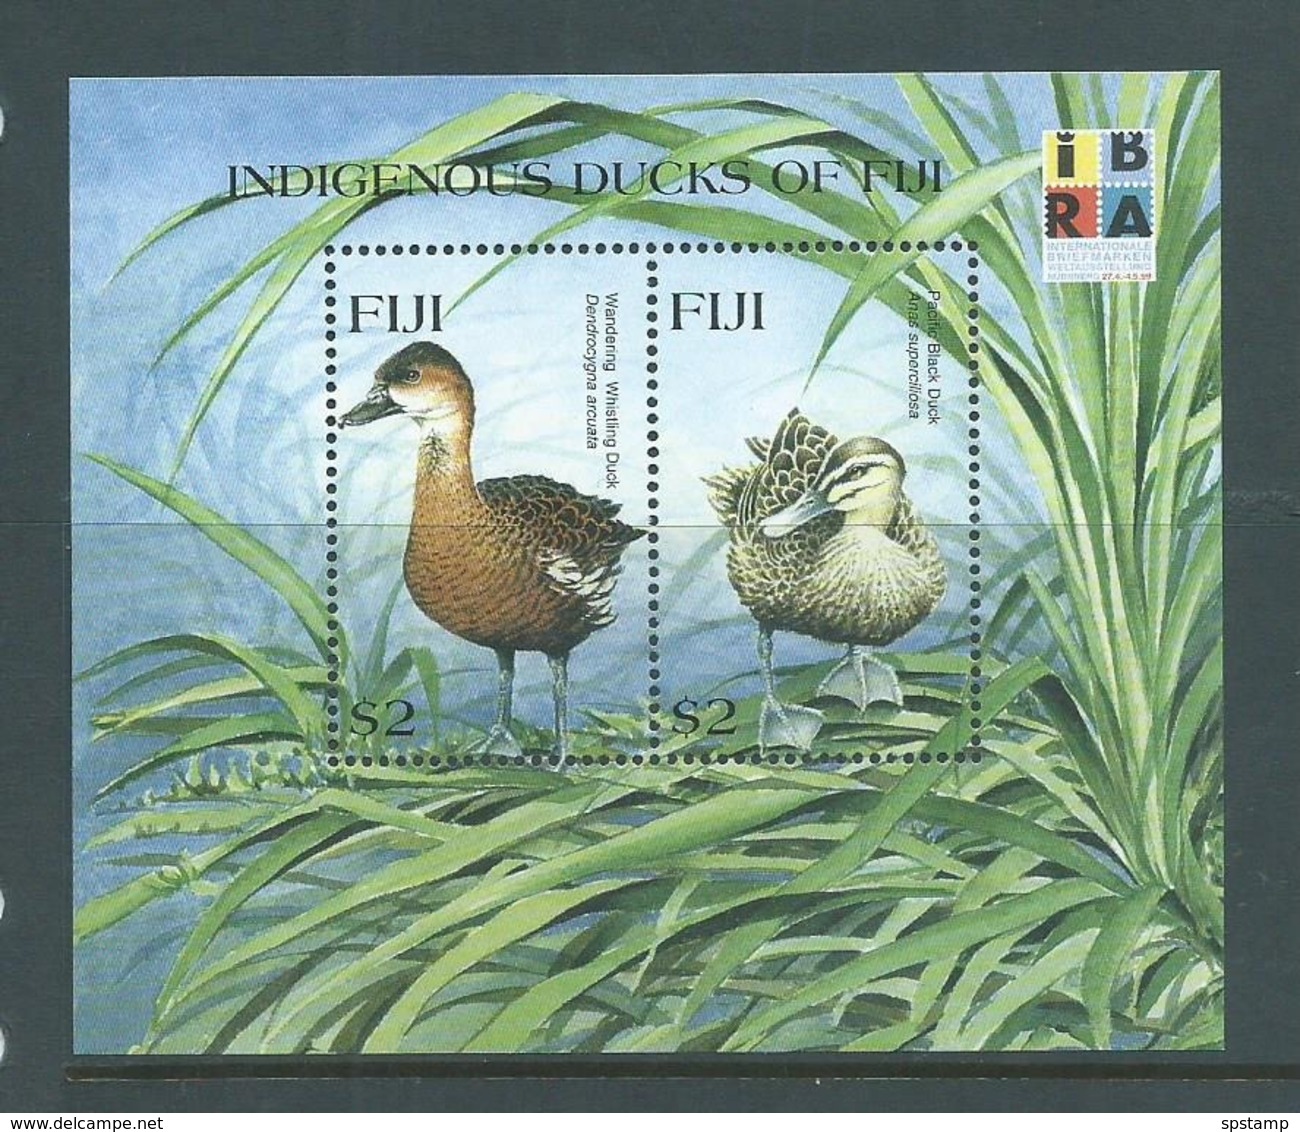 Fiji 1999 Indigenous Ducks IBRA Miniature Sheet MNH - Fiji (1970-...)